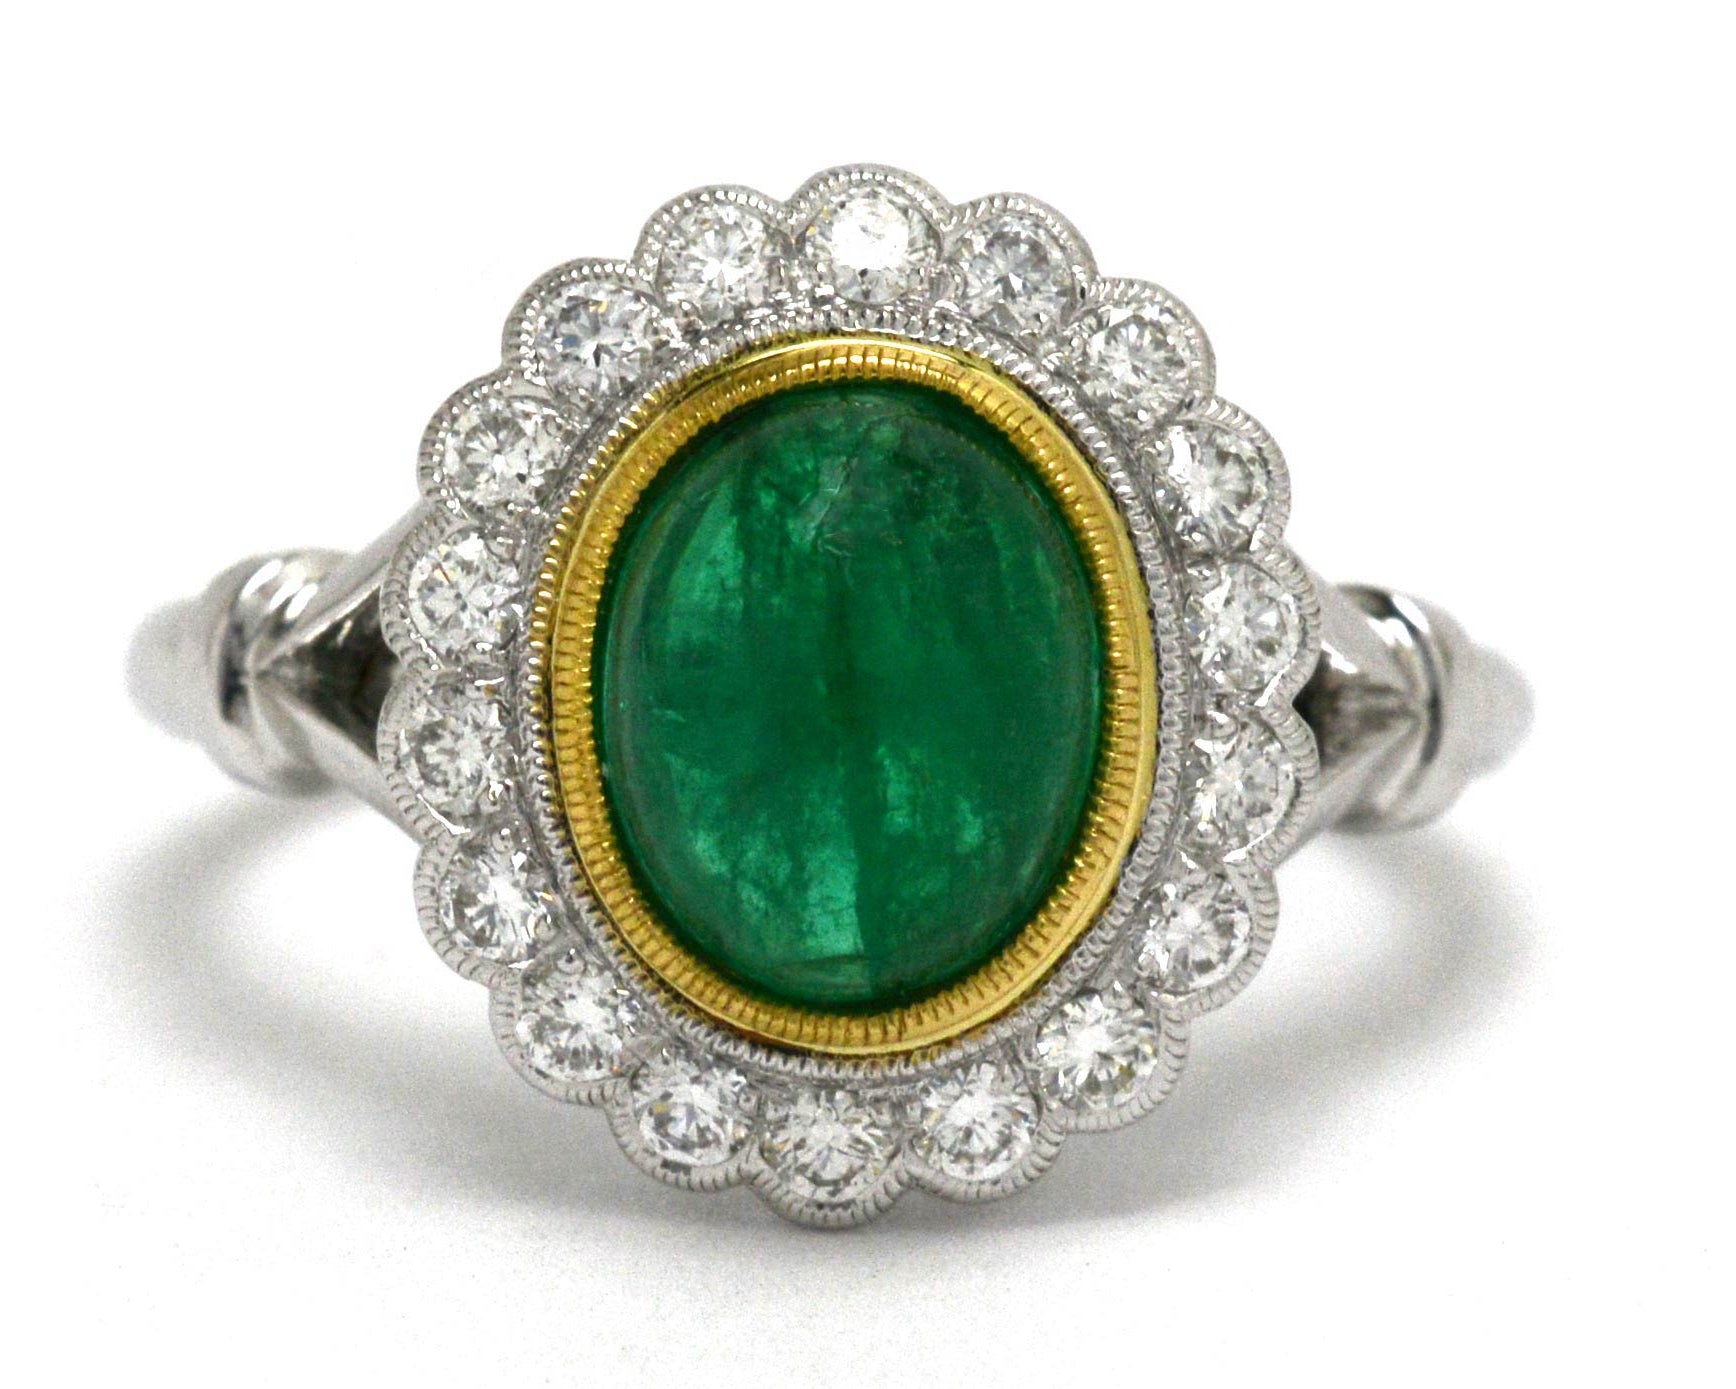 An Edwardian style emerald and diamond halo Princess Diana ring.